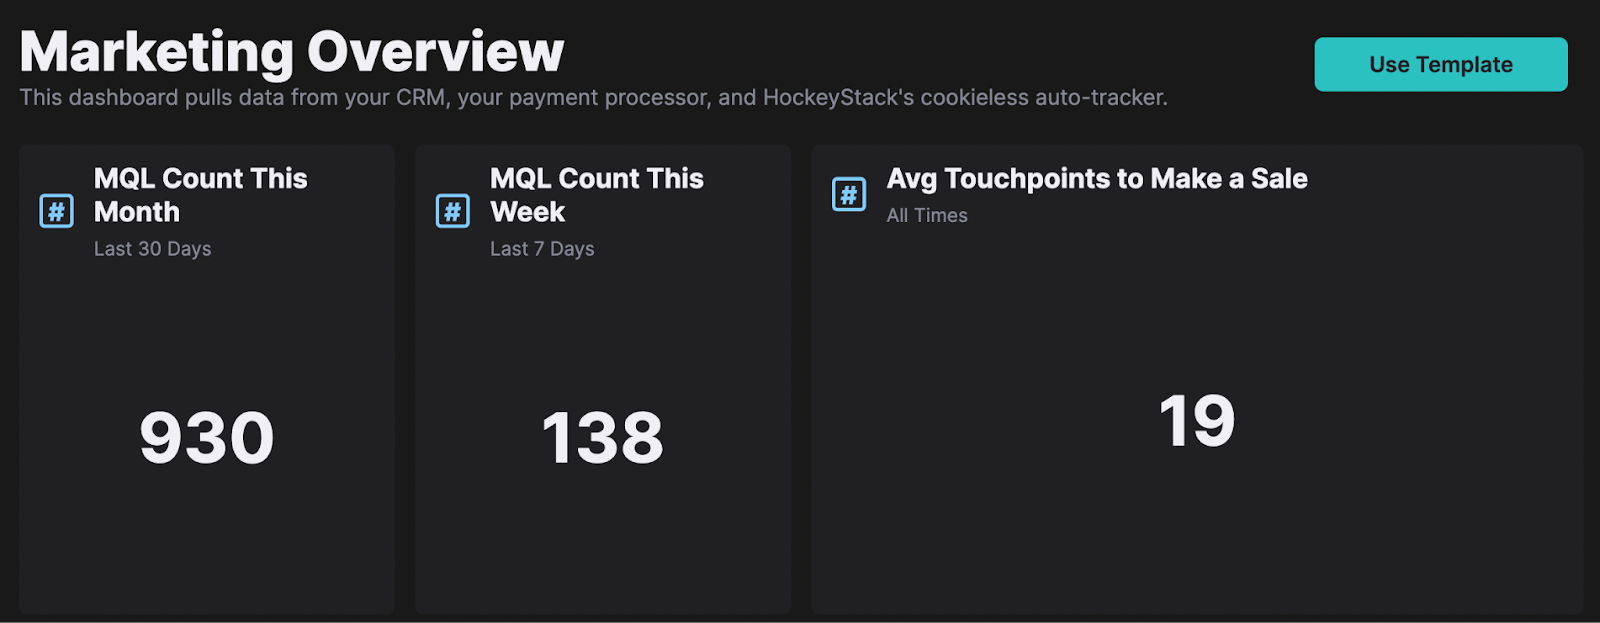 HockeyStack's marketing overview screenshot